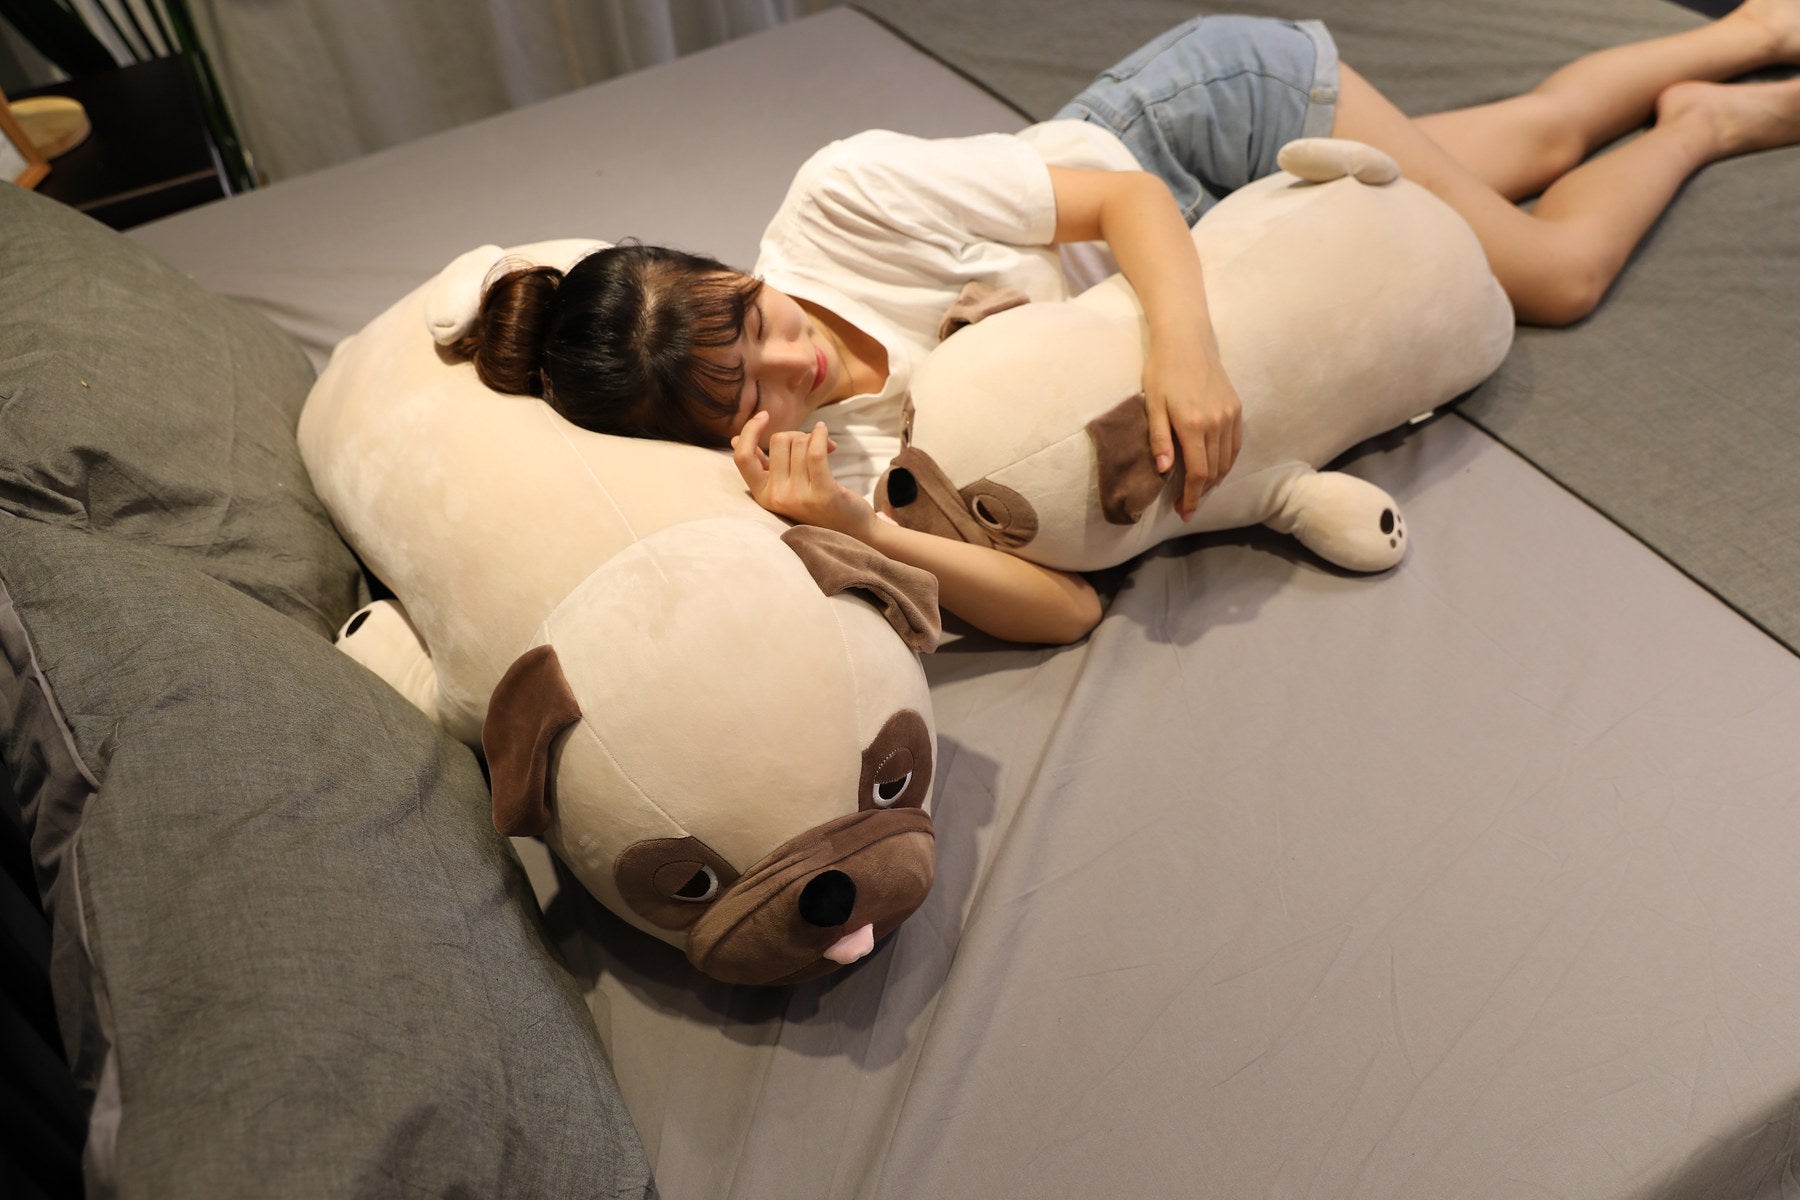 55-90cm Big Size New Cute Animal Kawaii Pug Dog Plush Toys Sleep Pillow Kids Birthday Gift Child Girl Xmas Valentine's